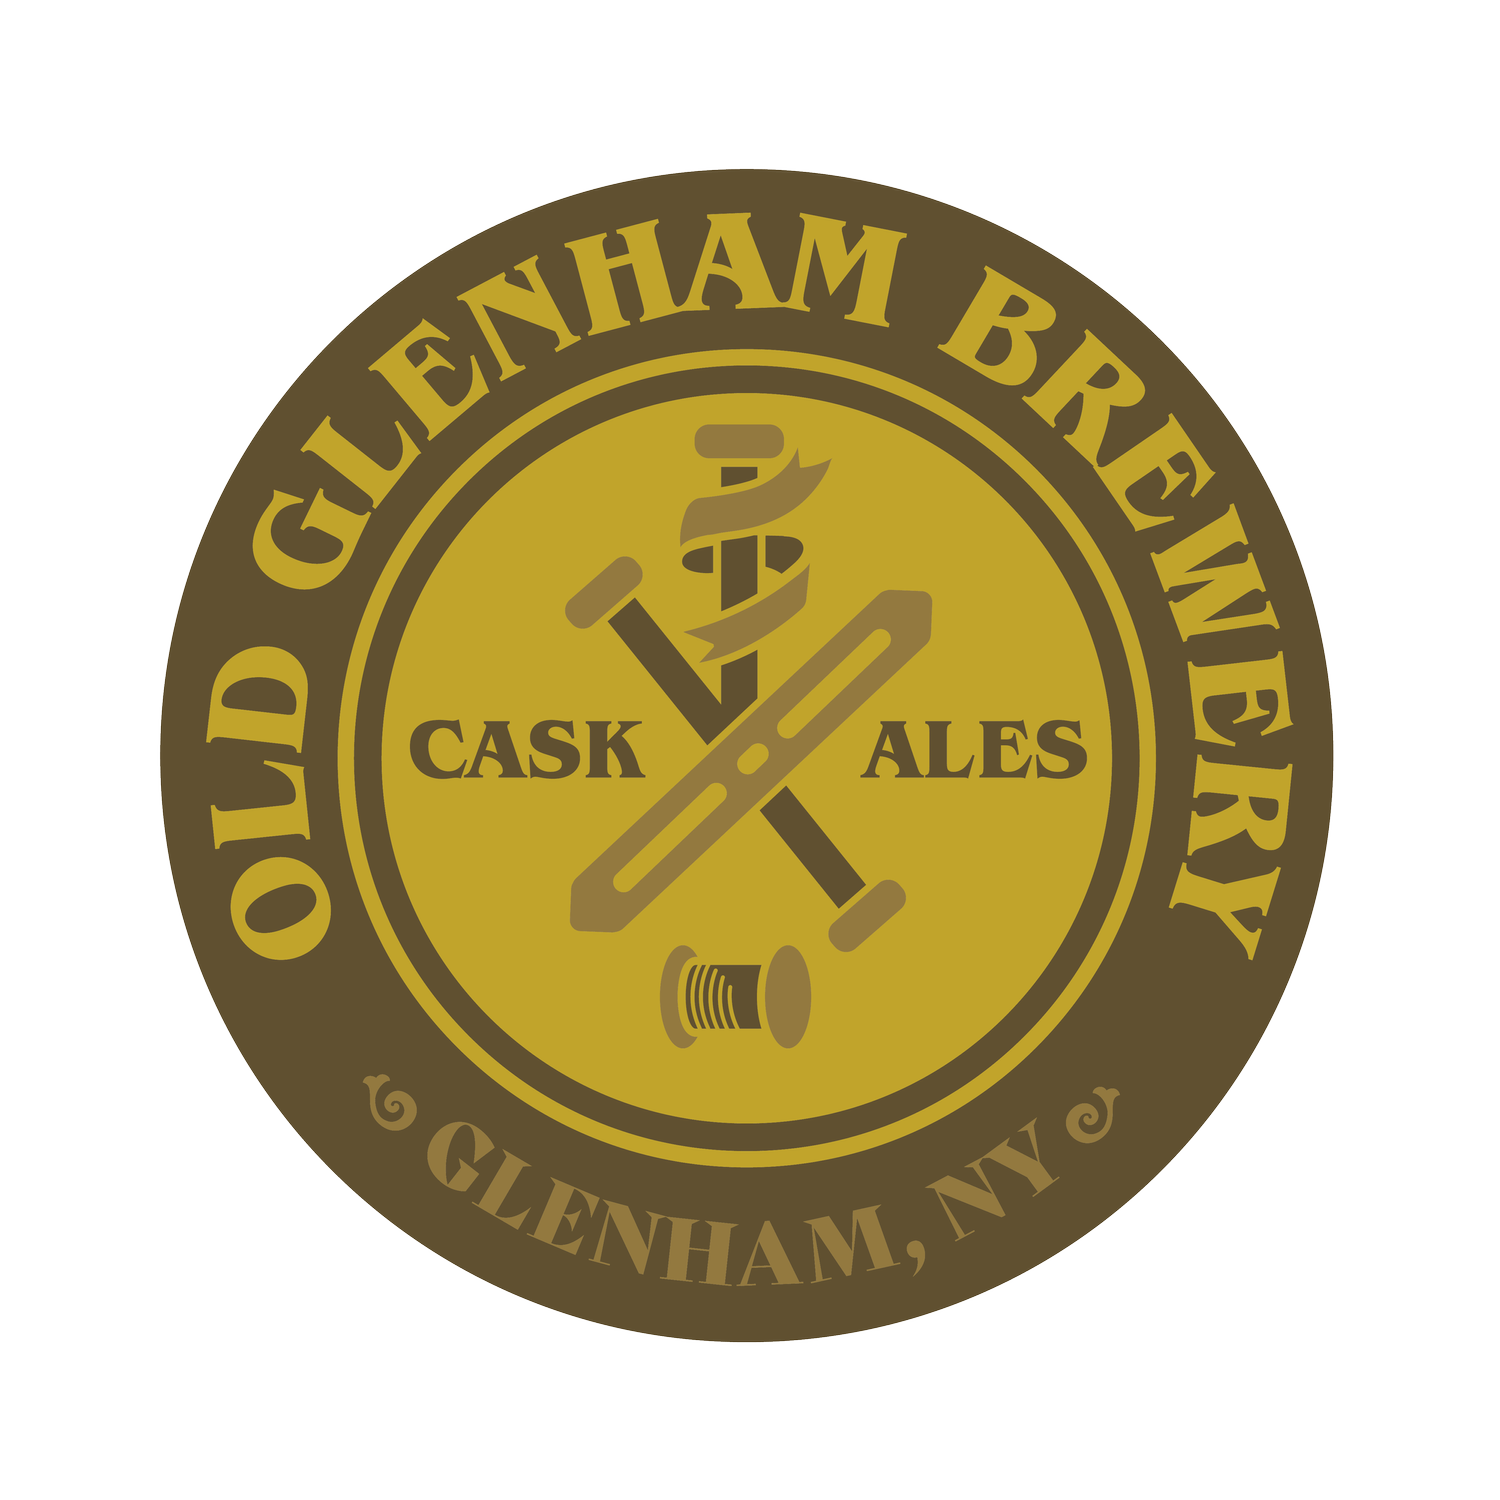 Old Glenham Brewery 